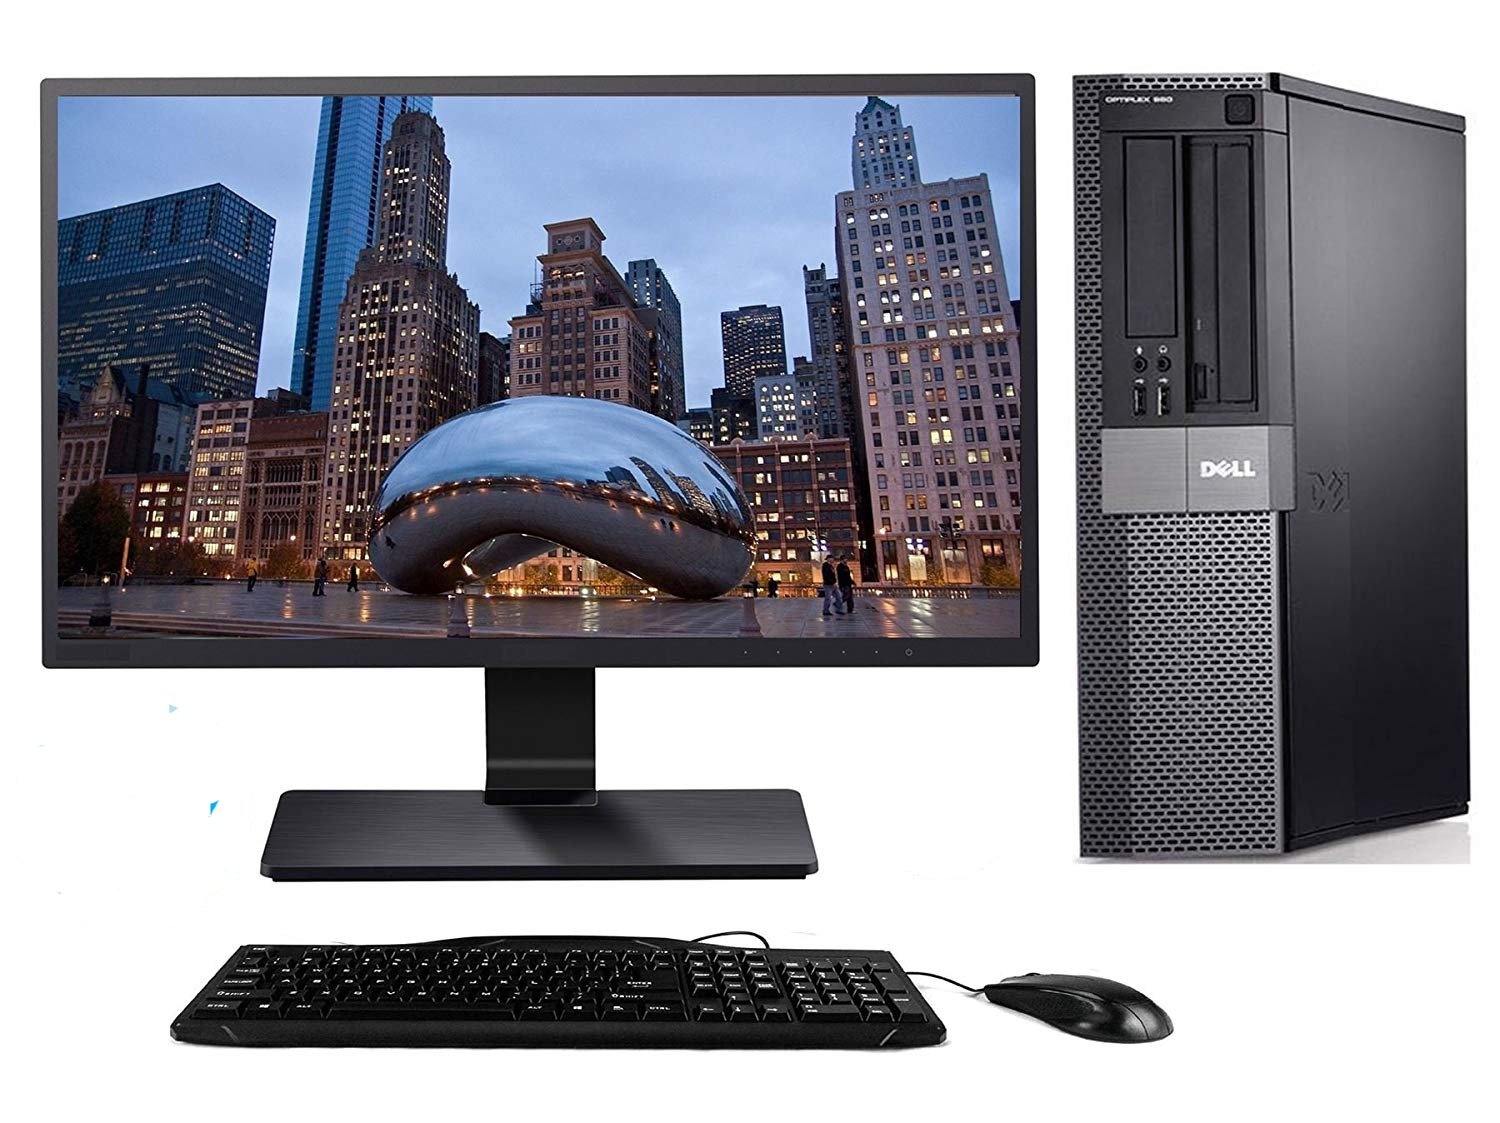 Dell Optiplex 9010 Desktop + 22 Inch Dell Monitor~Windows 10 64 Bit ~ Keyboard~Mouse~WiFi Refurbished - Atlas Computers & Electronics 